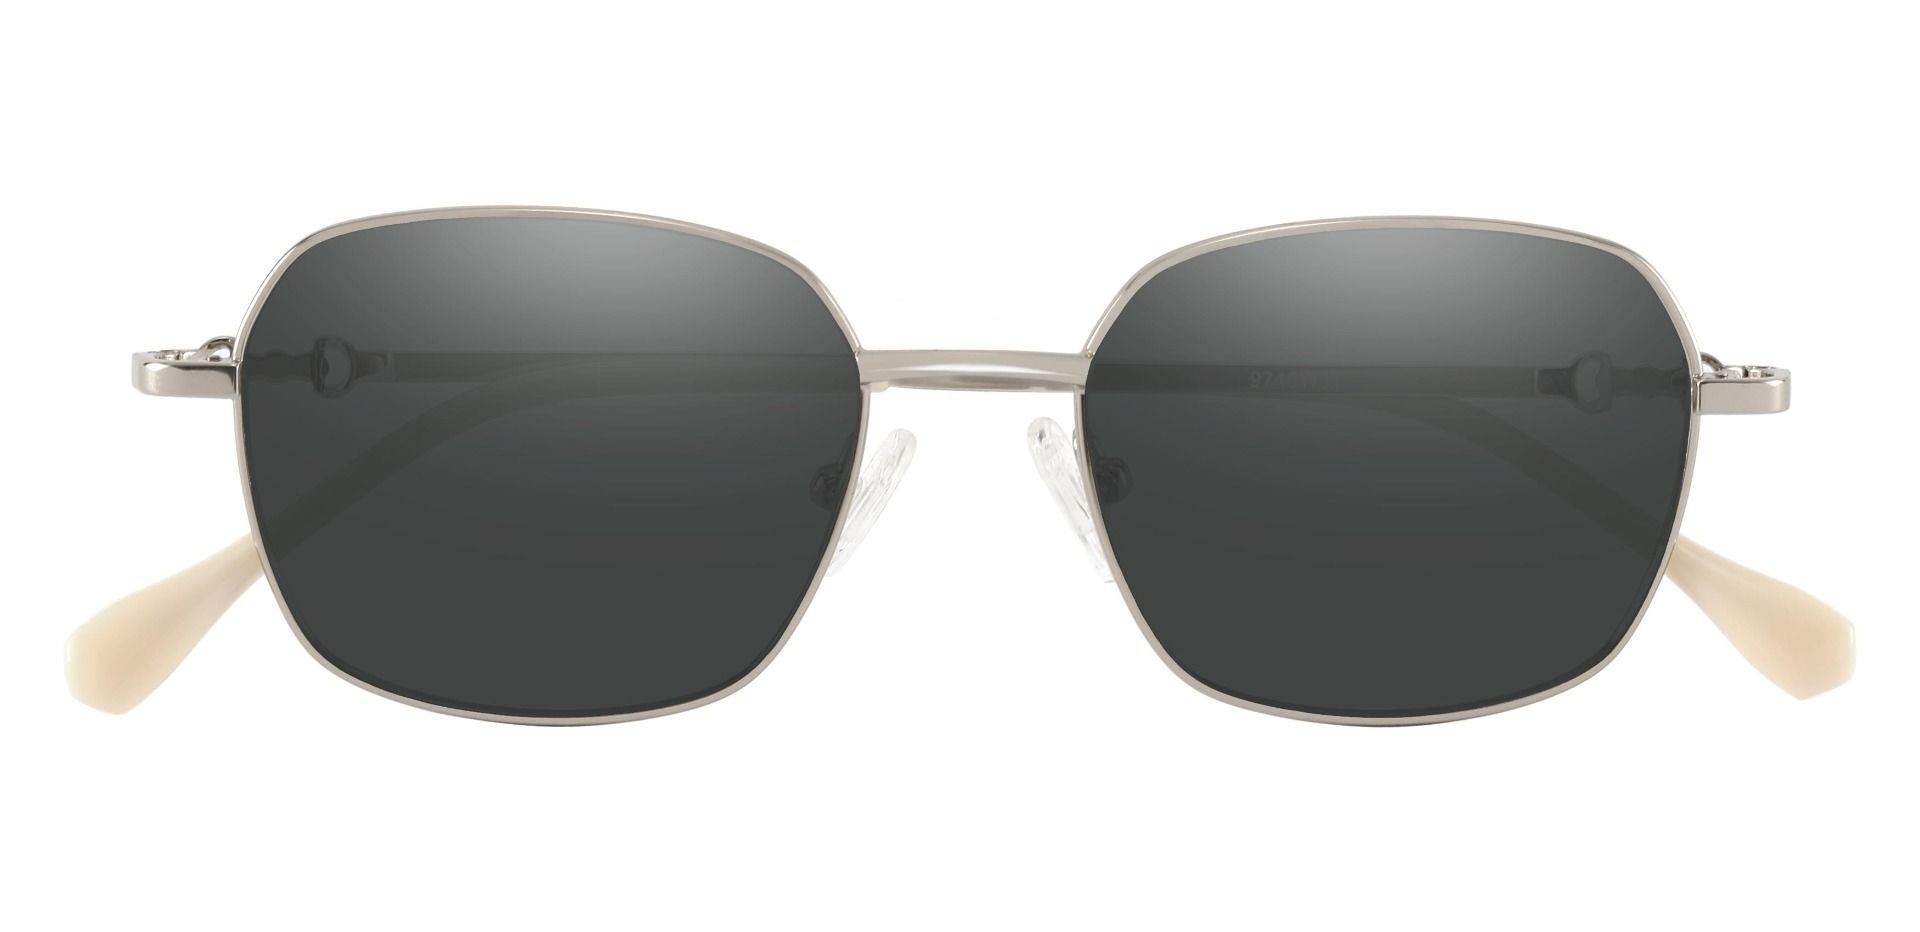 Averill Geometric Progressive Sunglasses - Silver Frame With Gray Lenses